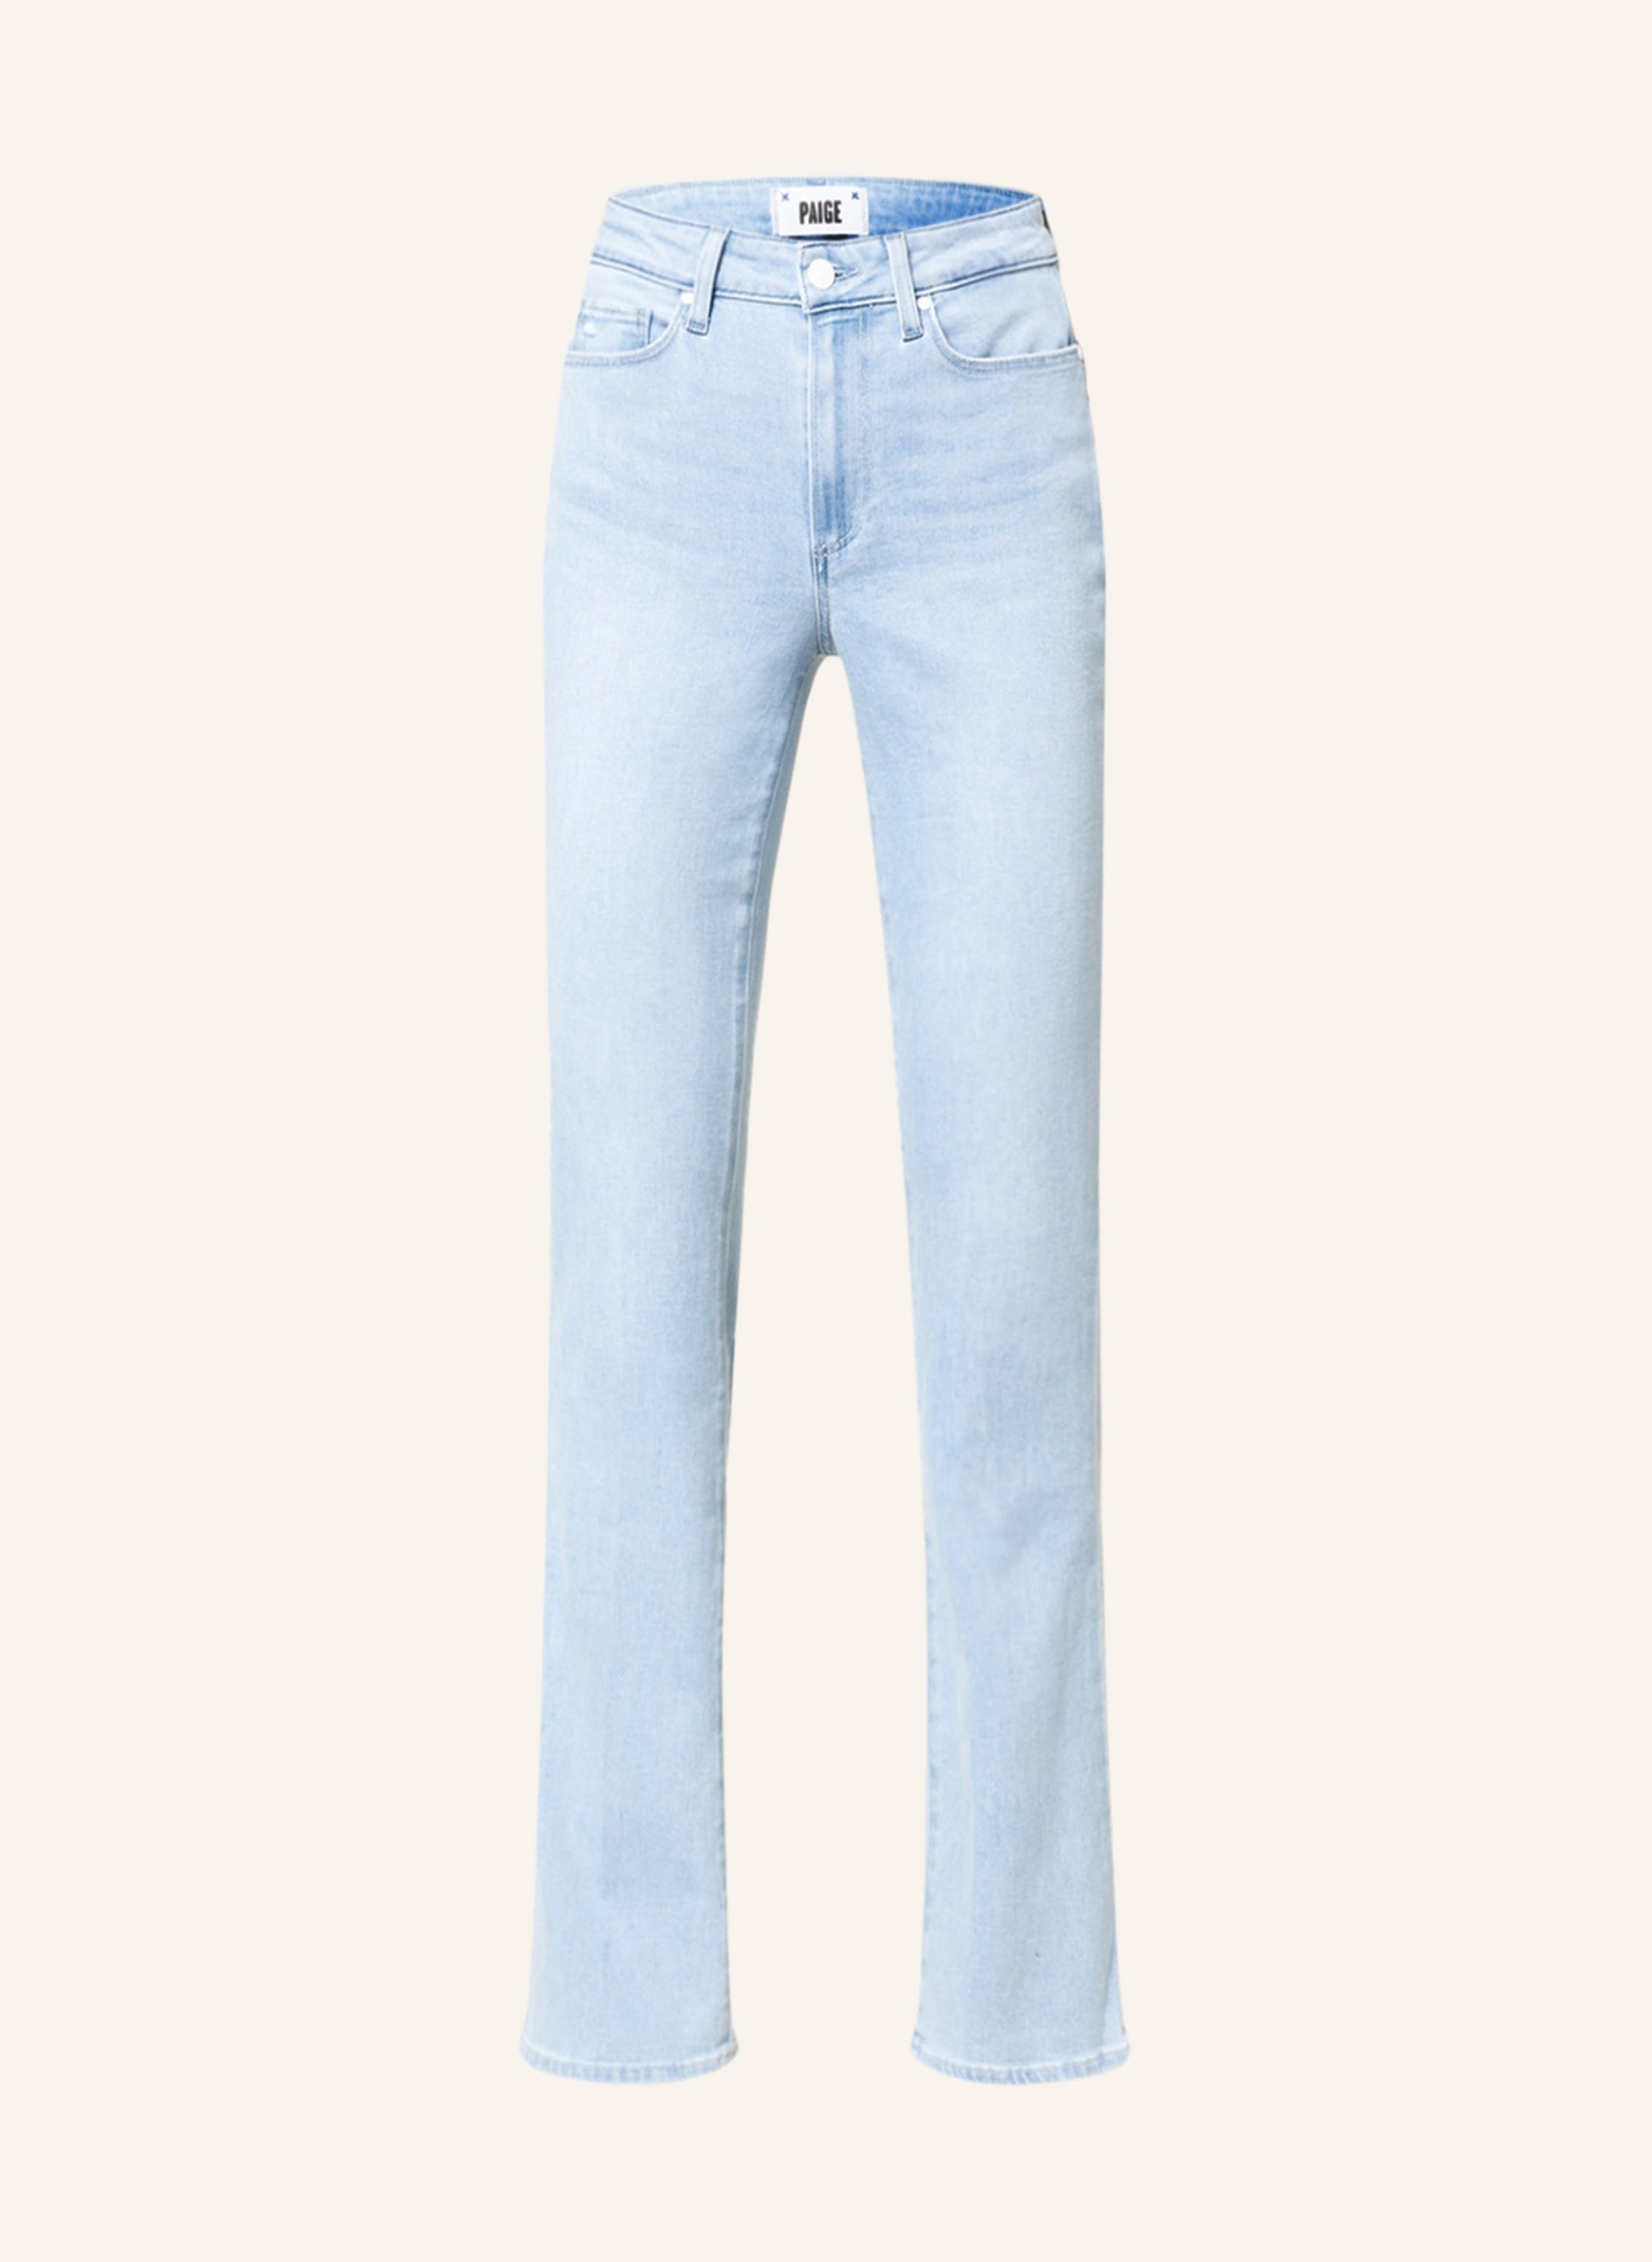 Damen Bekleidung Jeans Schlagjeans PAIGE Jeans hourglass in Weiß 